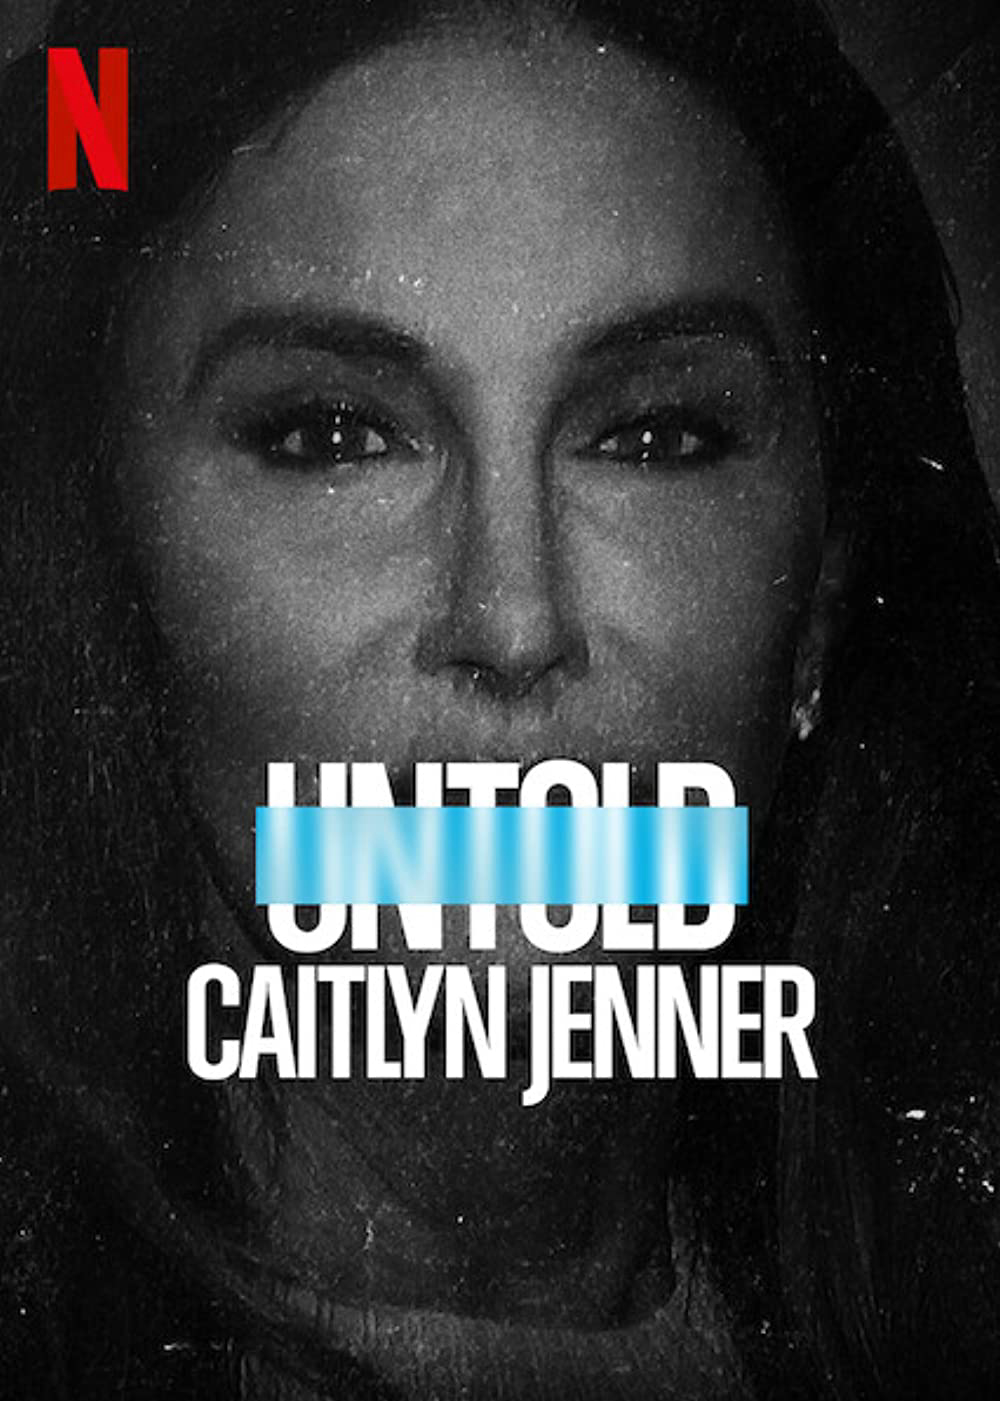 Bí mật giới thể thao: Caitlyn Jenner - Untold: Caitlyn Jenner